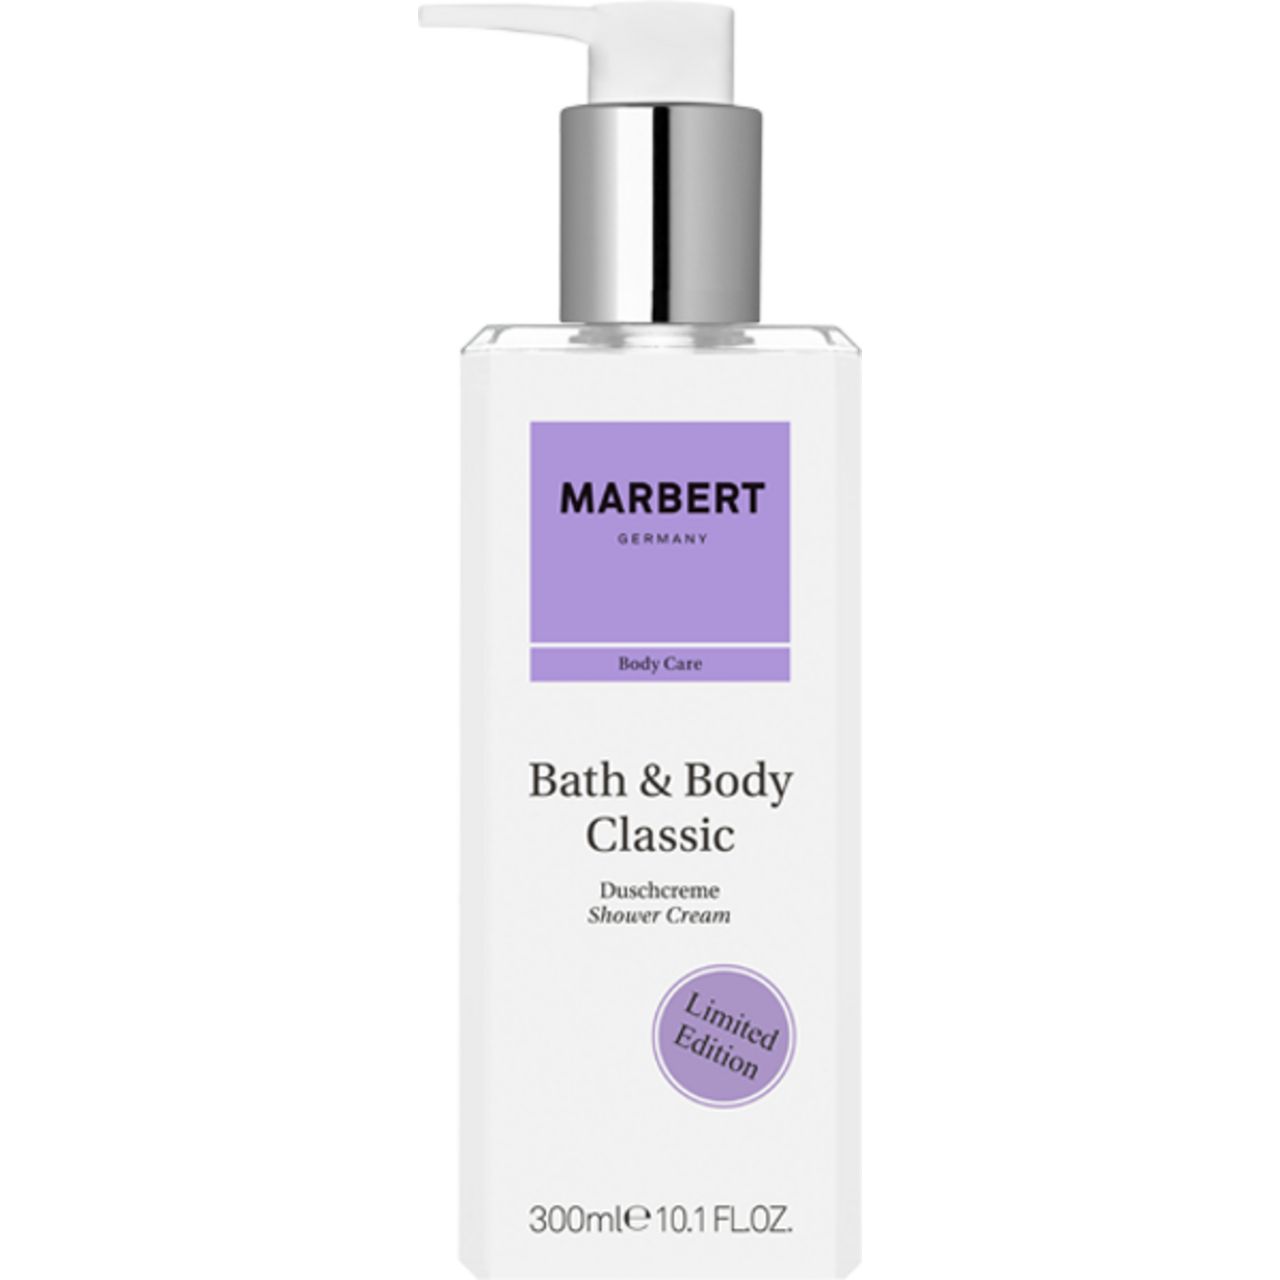 Marbert, Bath & Body Classic Shower Cream